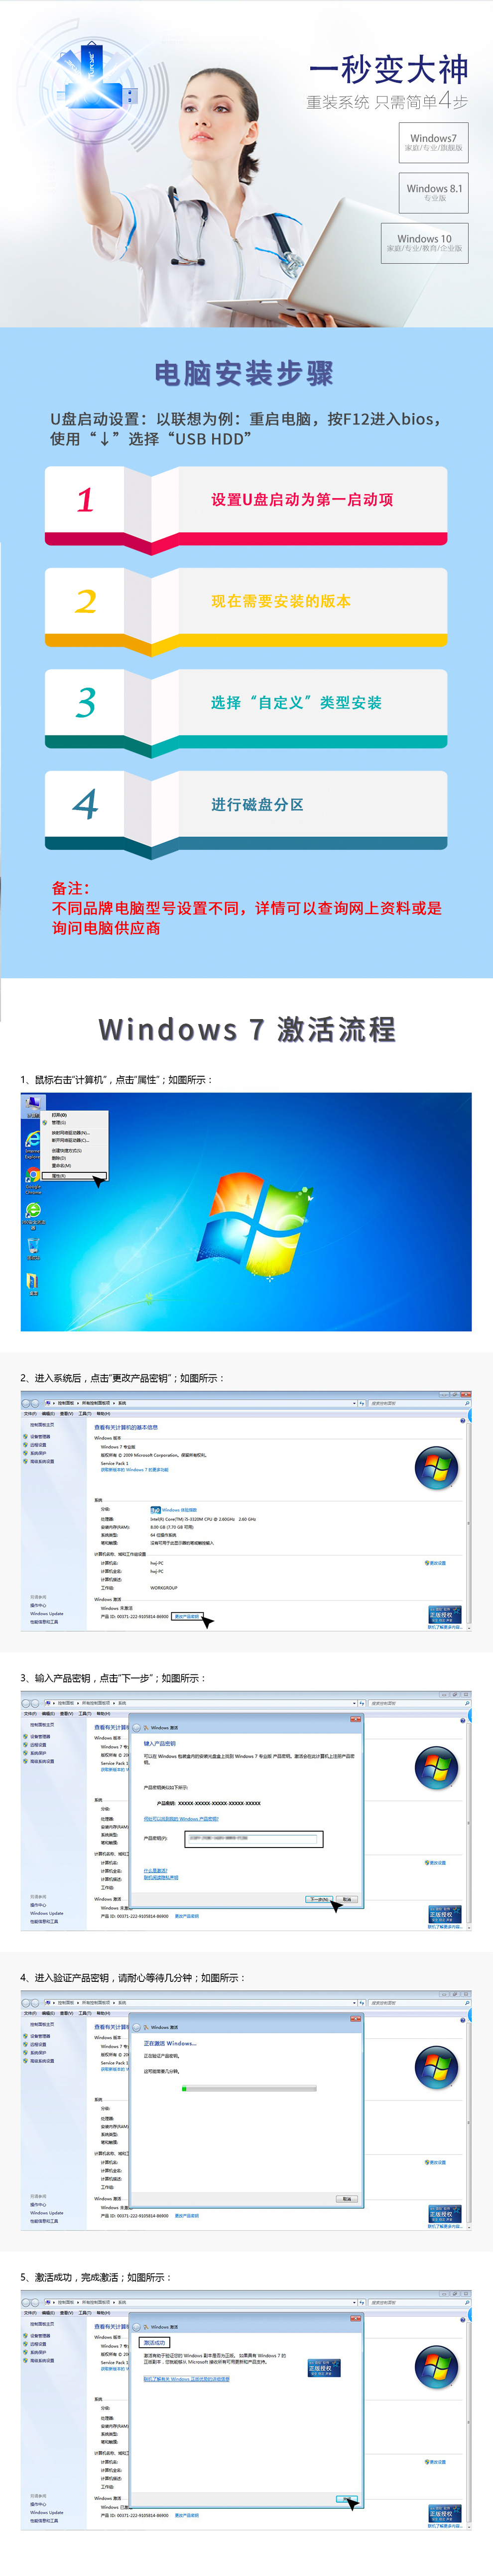 Windows 7 U盘.jpg